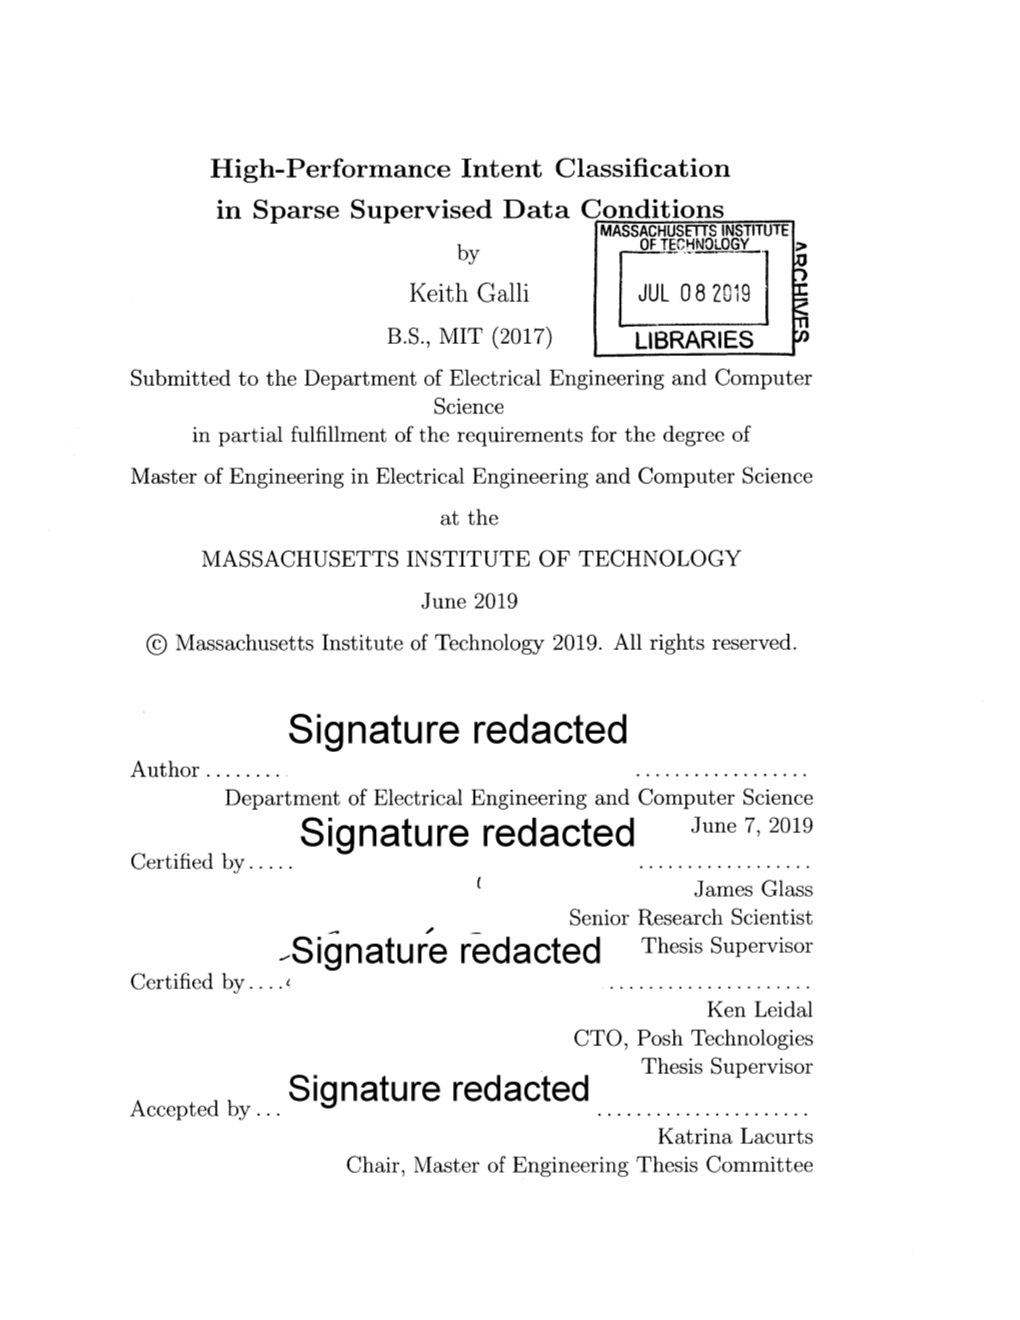 Signature Redacted a Uthor